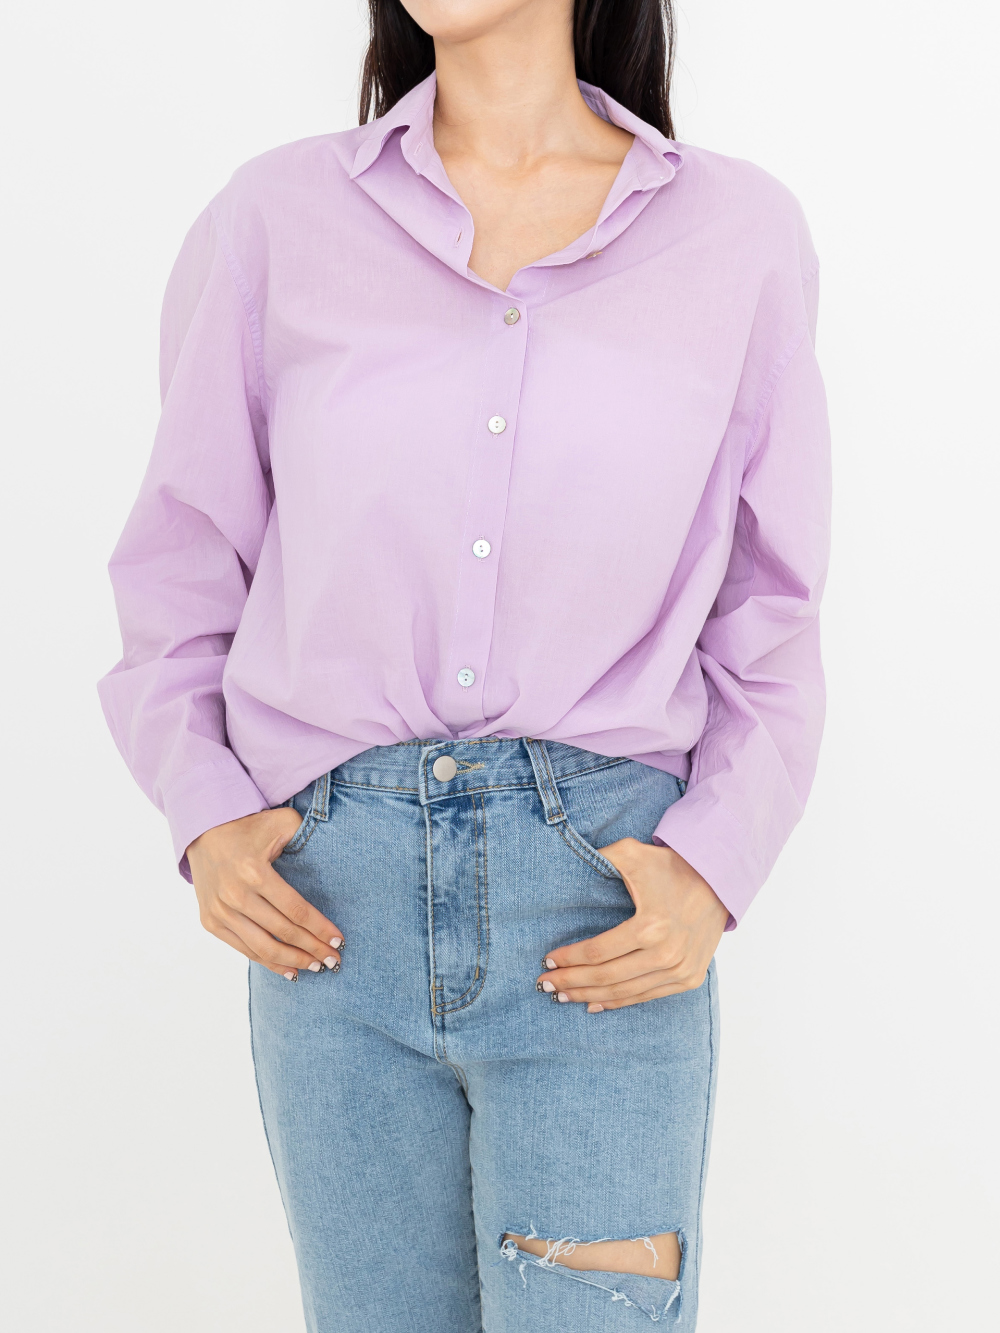 blouse model image-S1L5